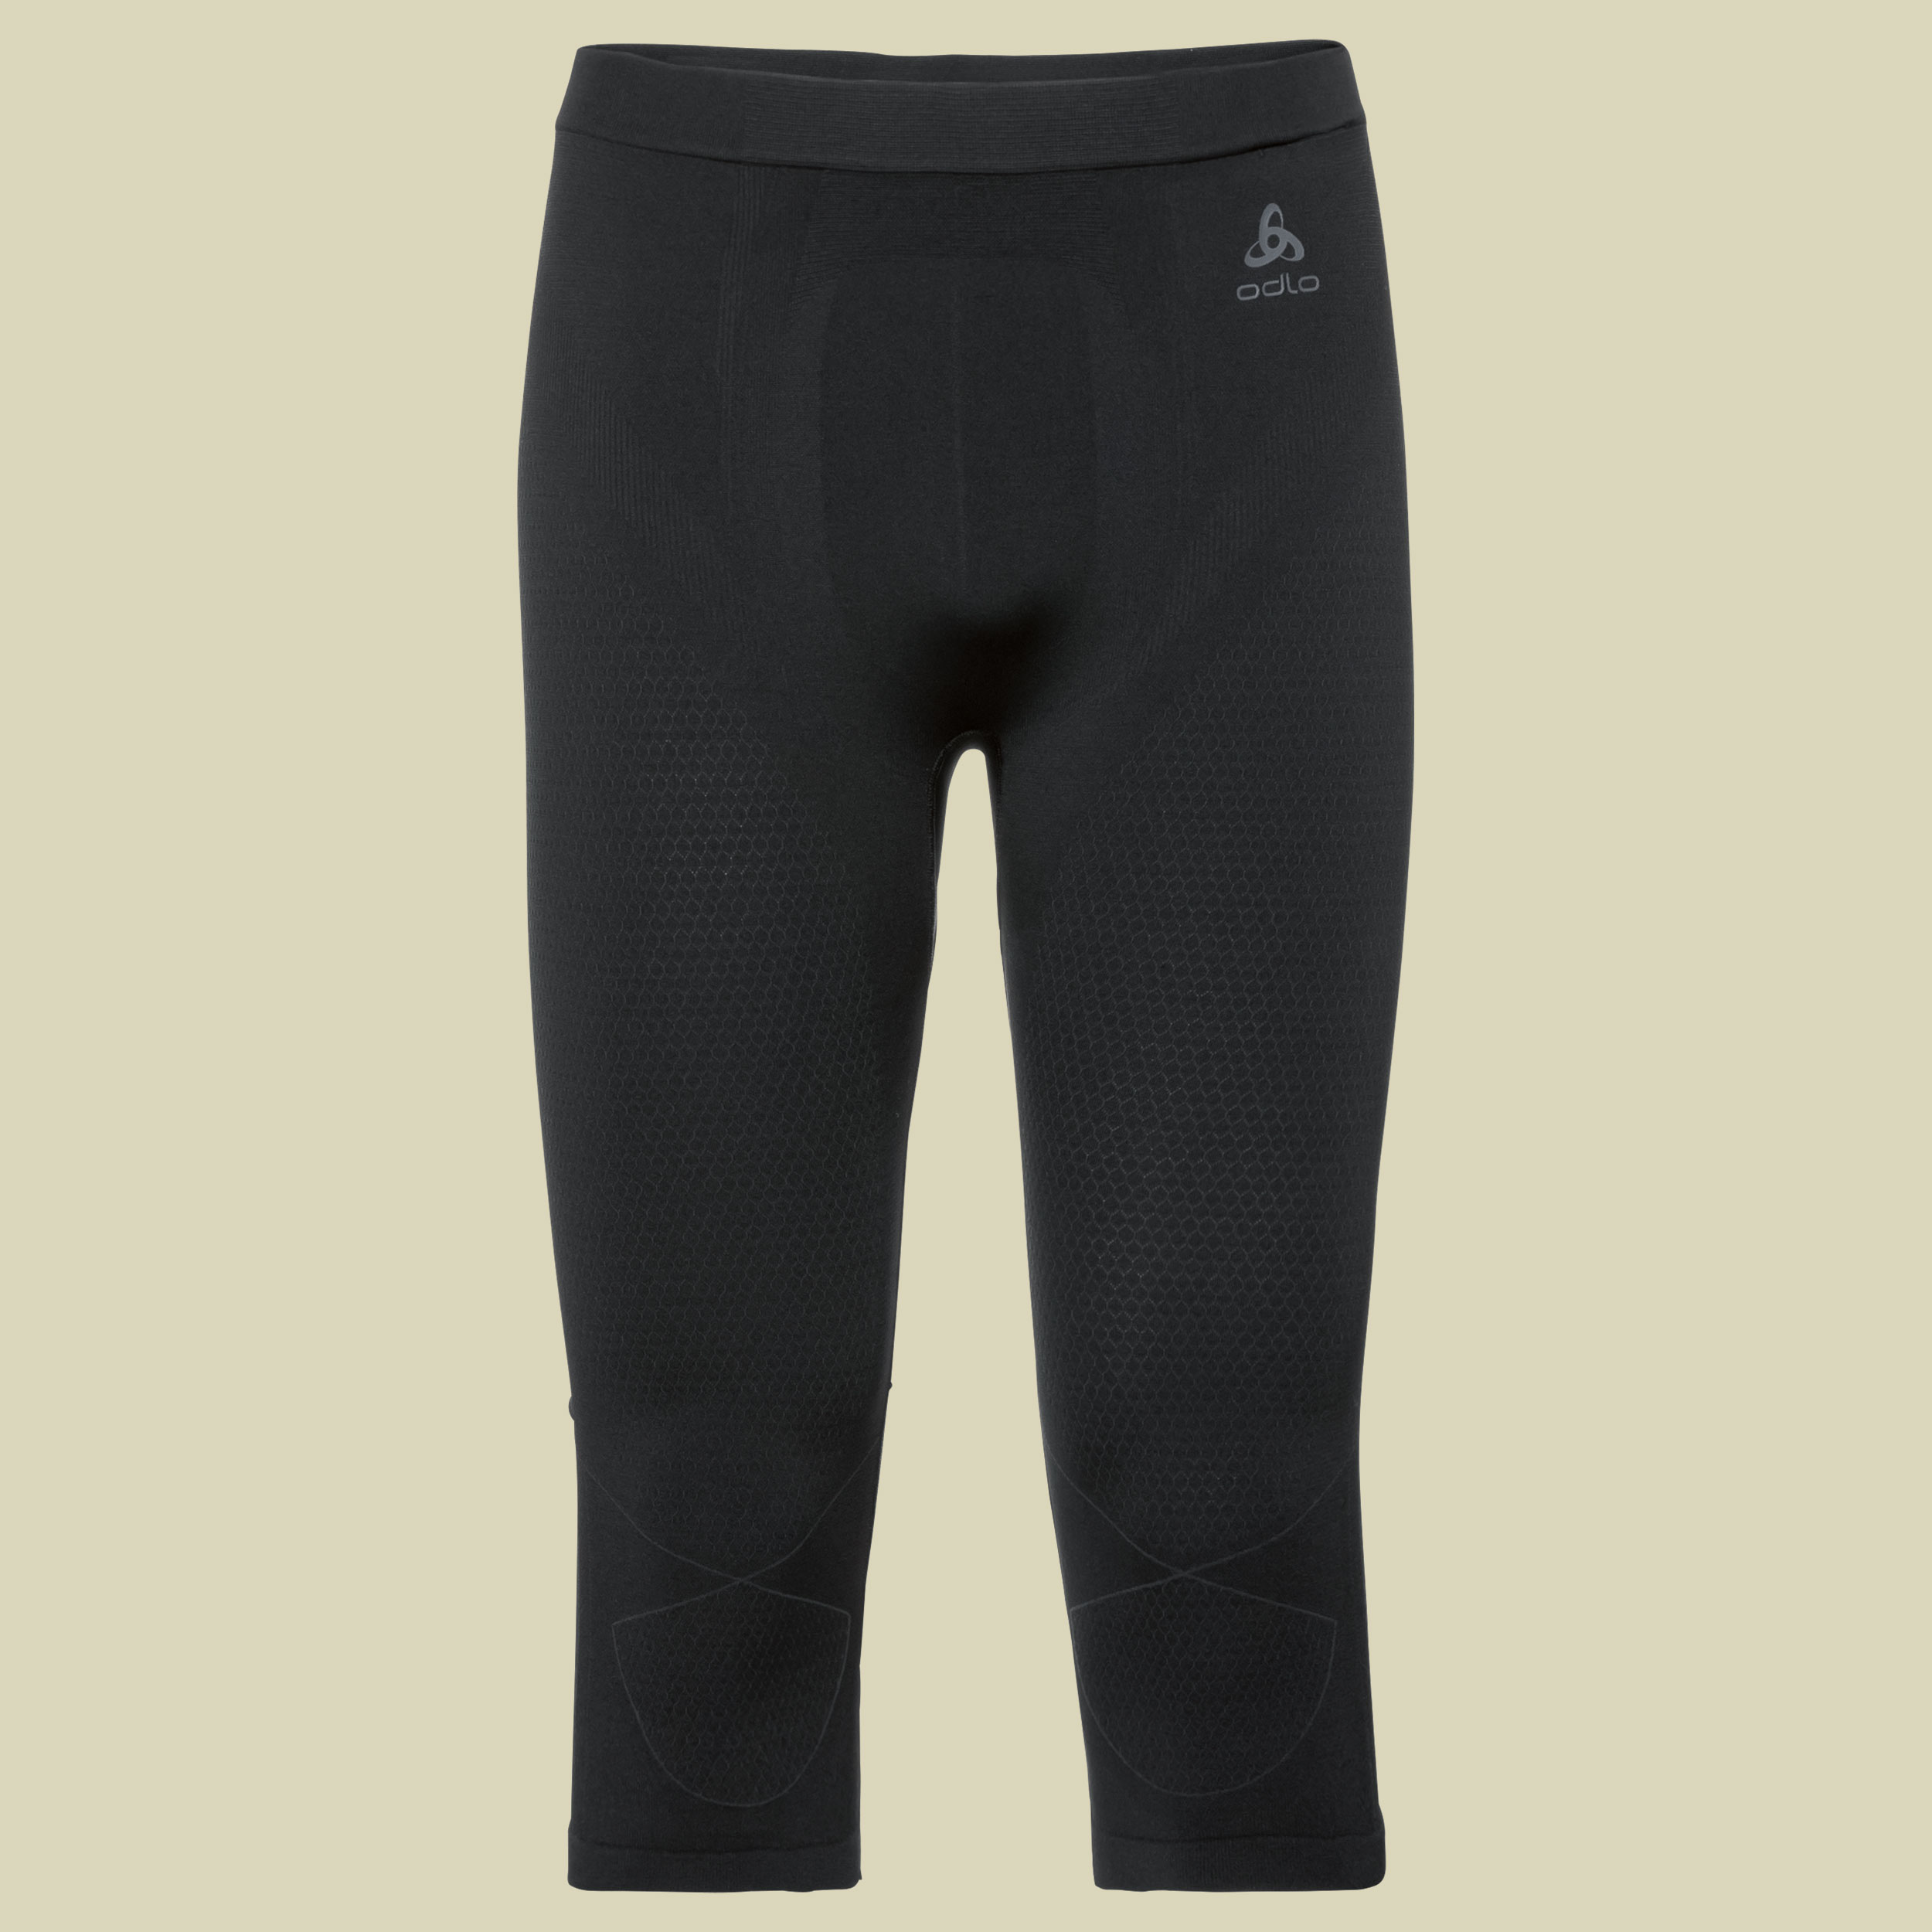 Evolution Warm Pants 3/4 Men 184162 Größe M Farbe black-odlo graphite grey